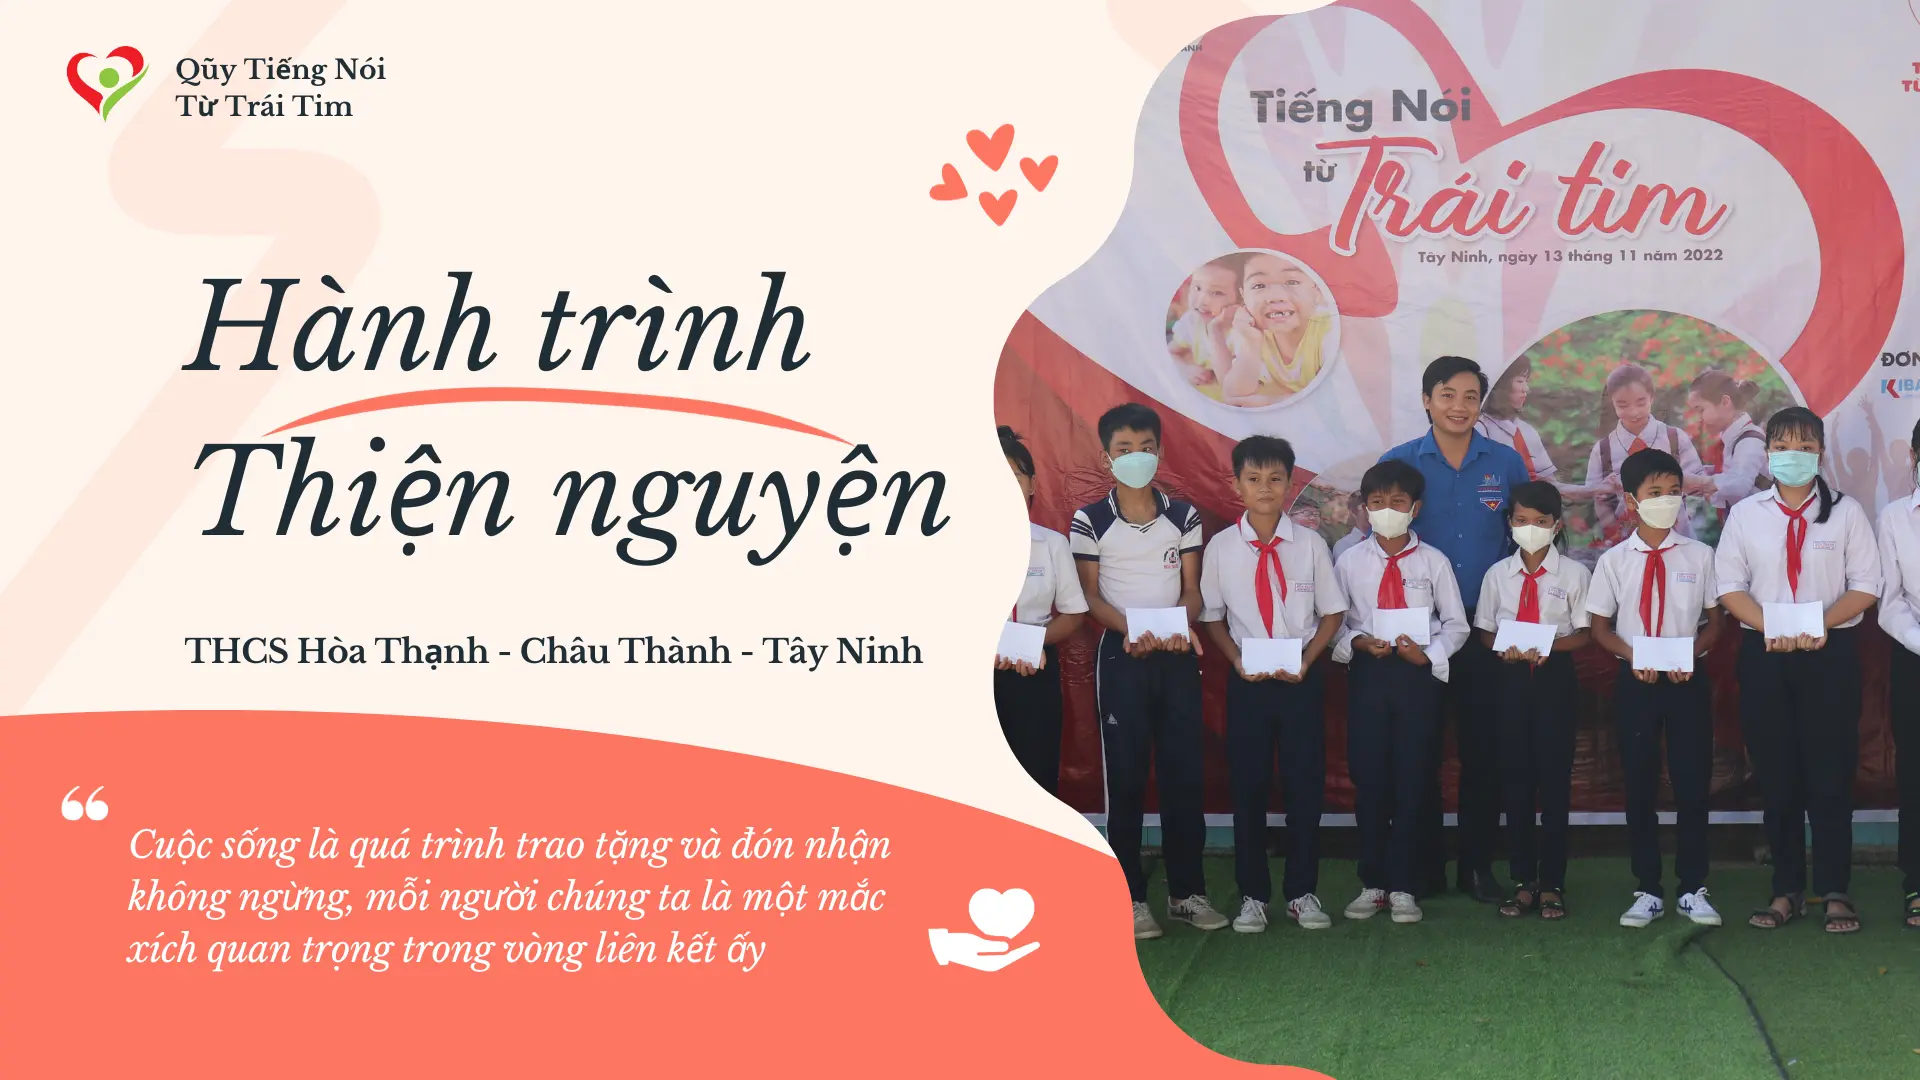 Truong Thcs Hoa Thanh